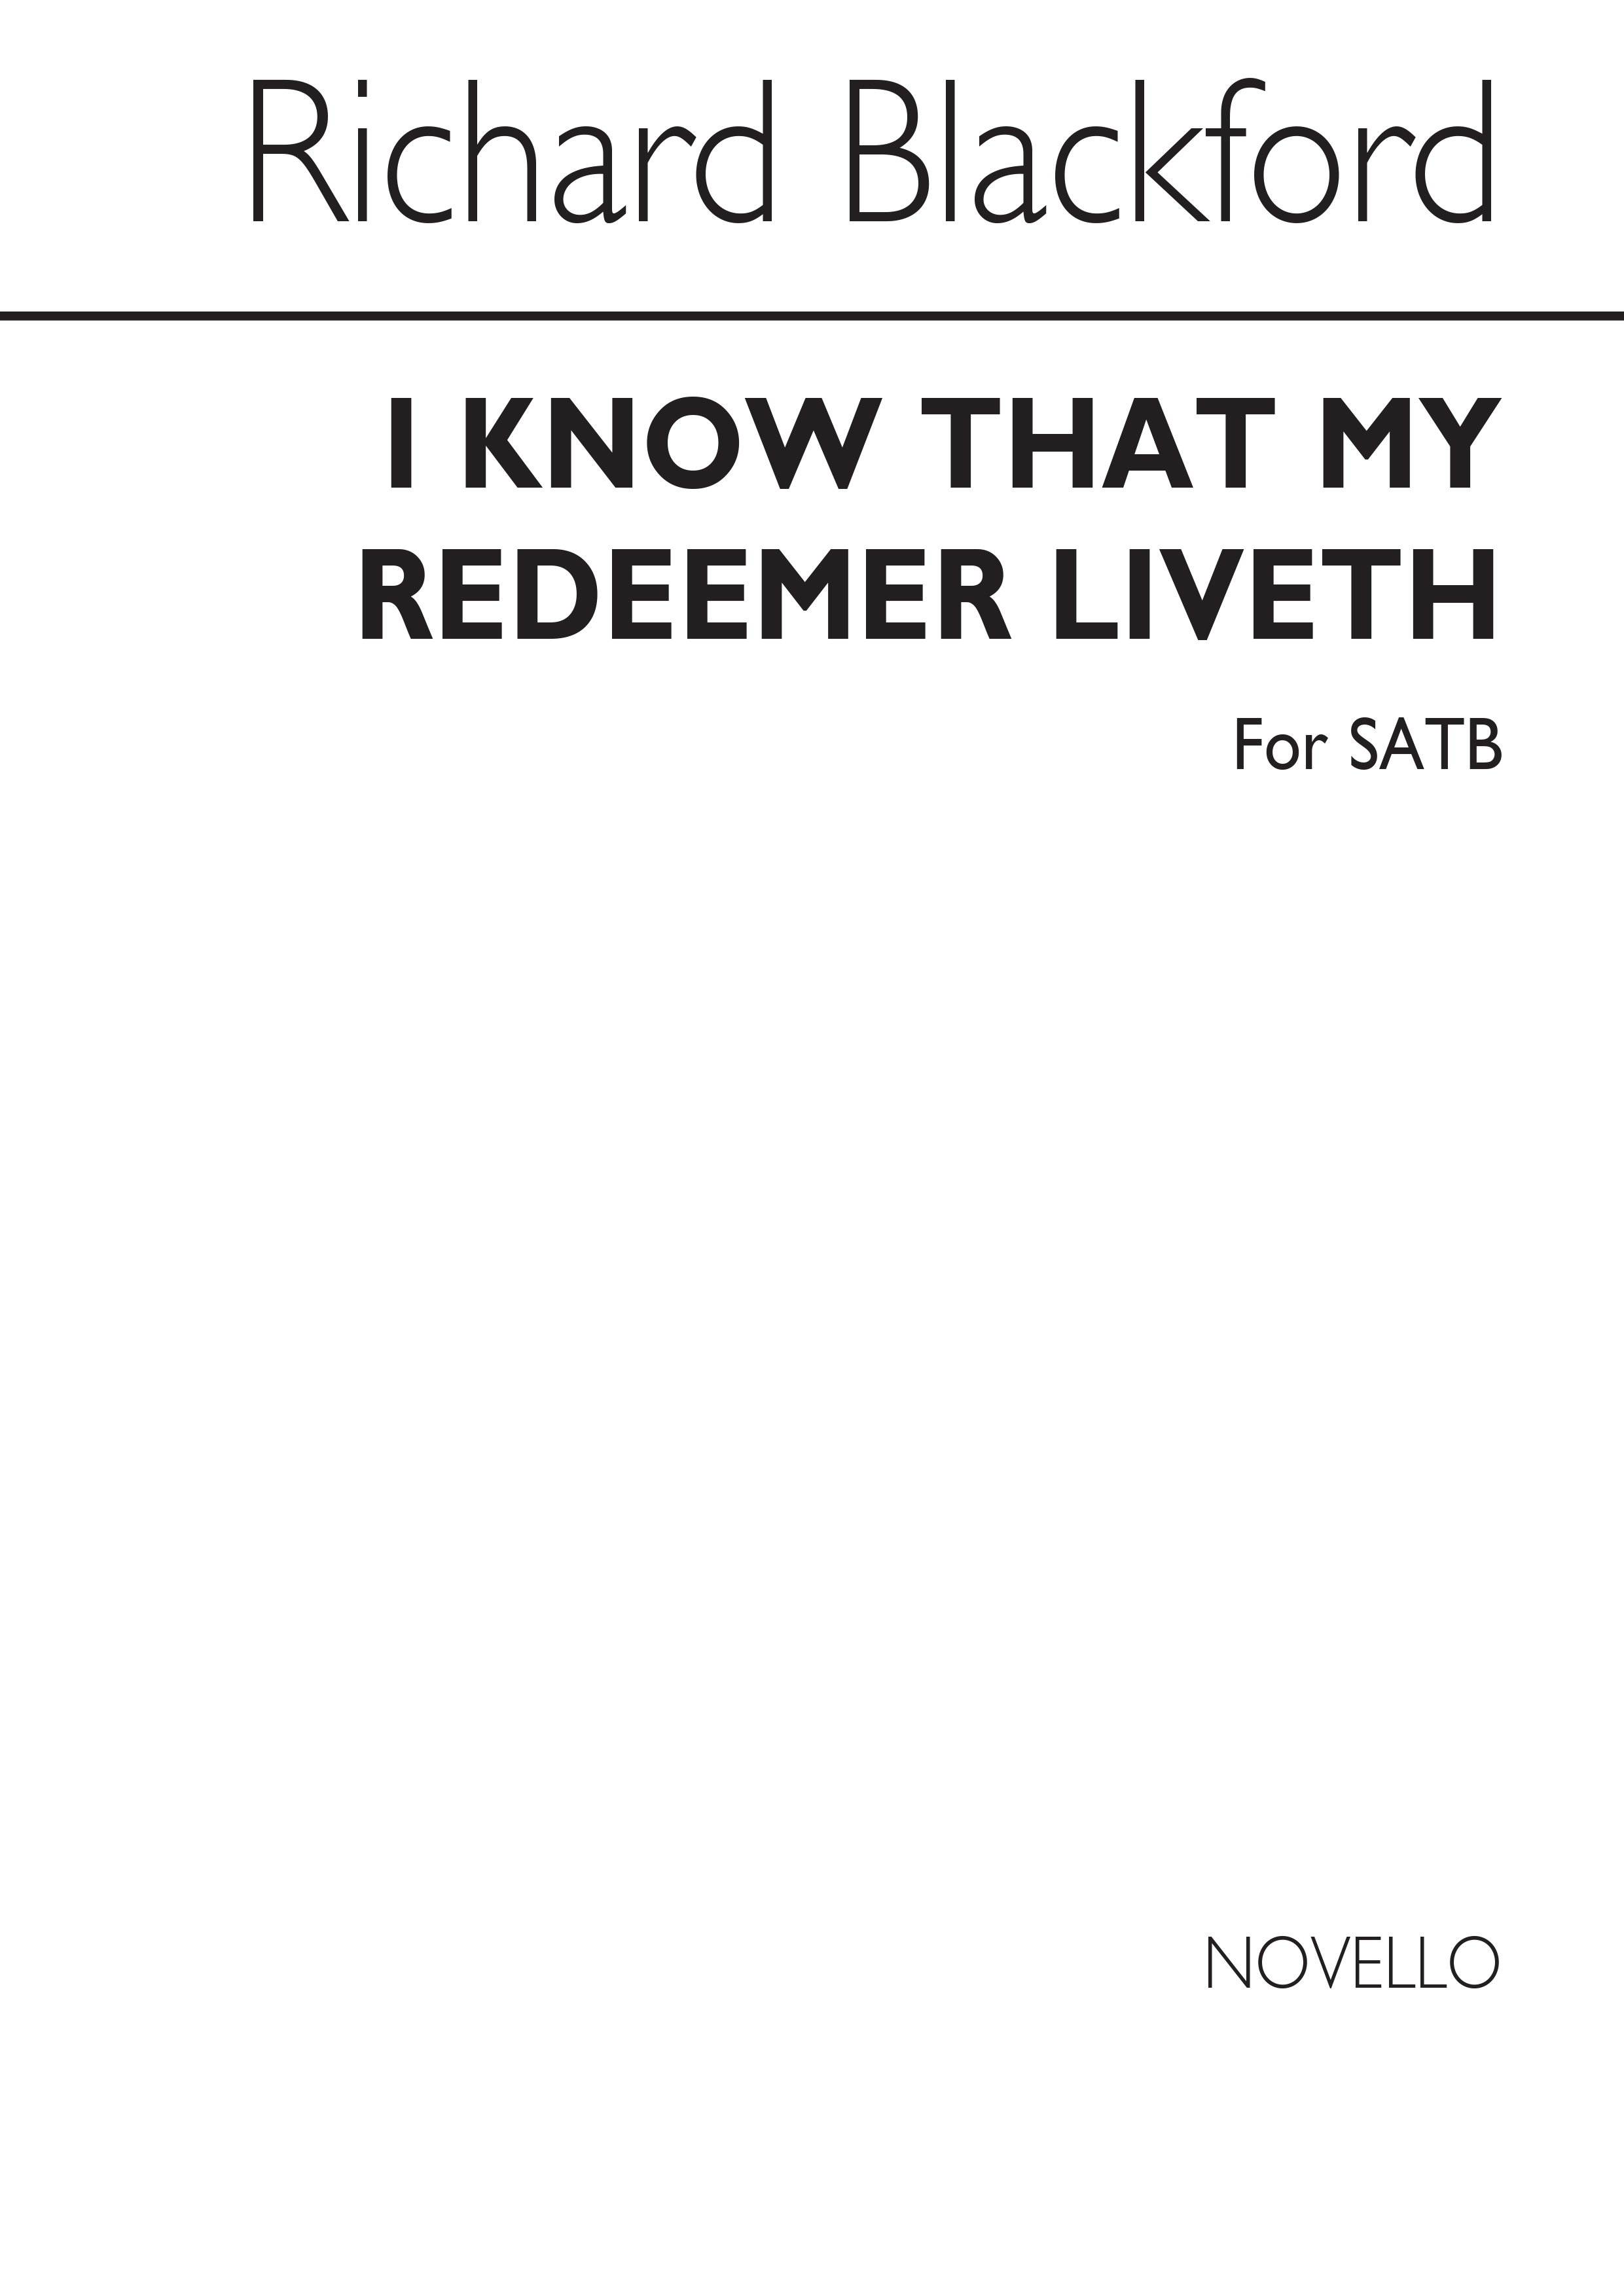 Richard Blackford: I Know That My Redeemer Liveth